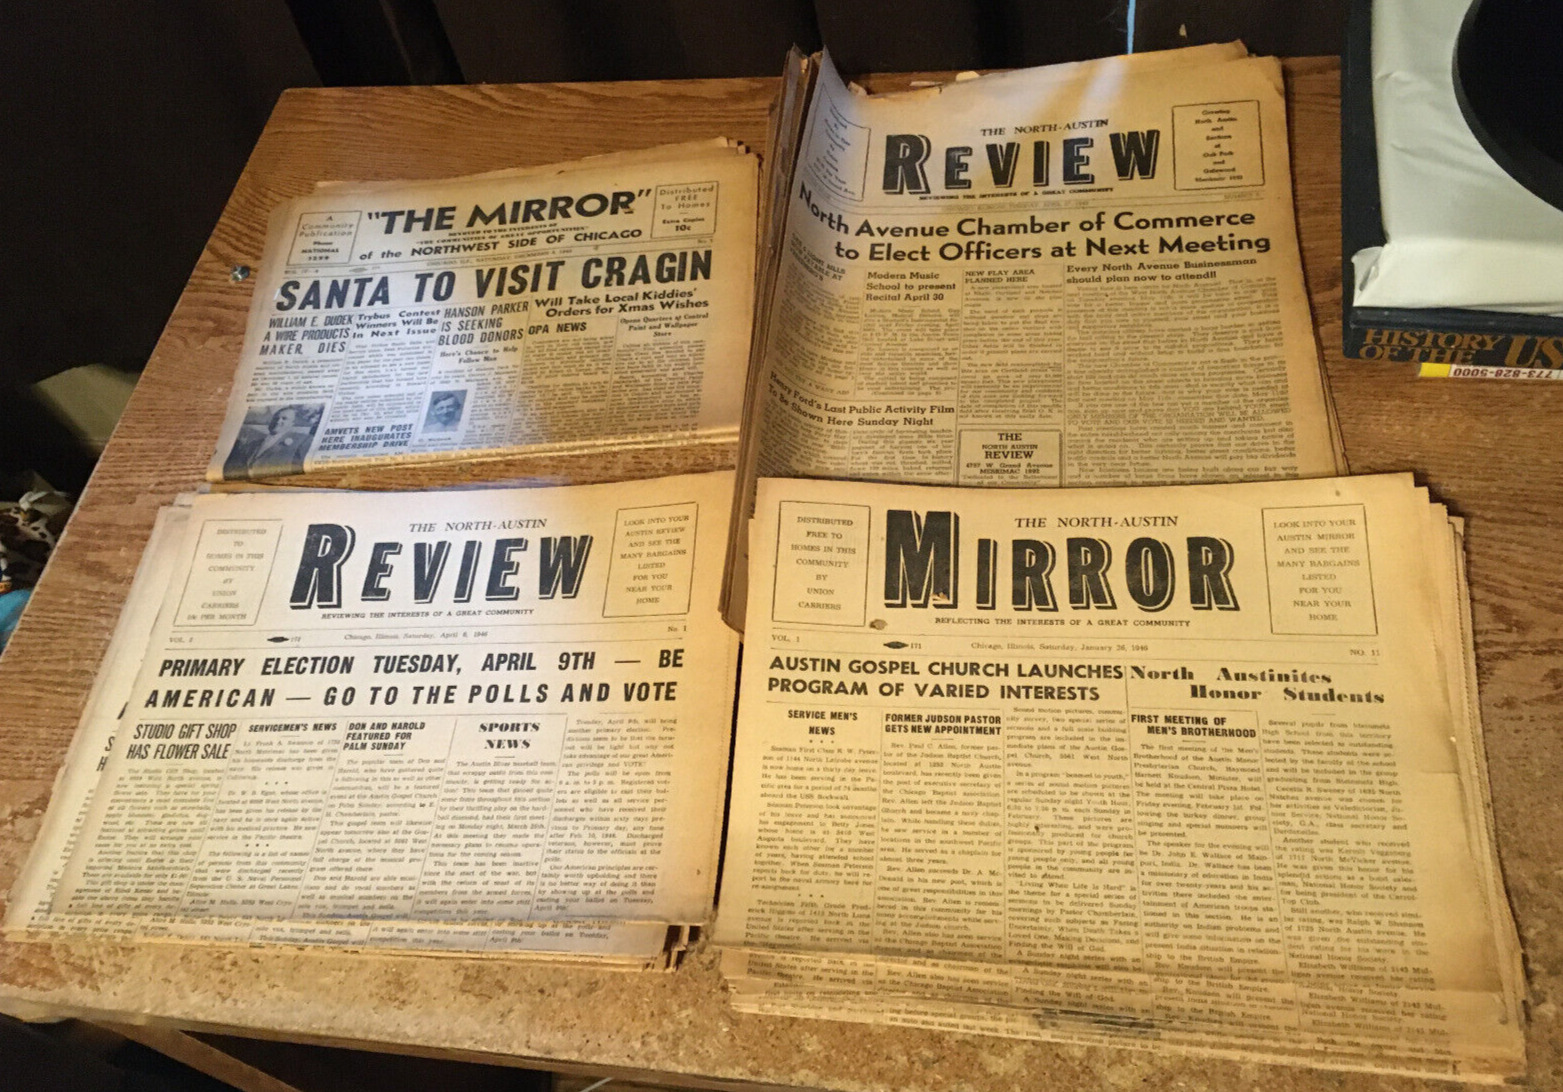 BIG LOT OF 1940S NEWSPAPERS CHICAGO IL 1945-1948 WW2 ERA THE NORTH-AUSTIN